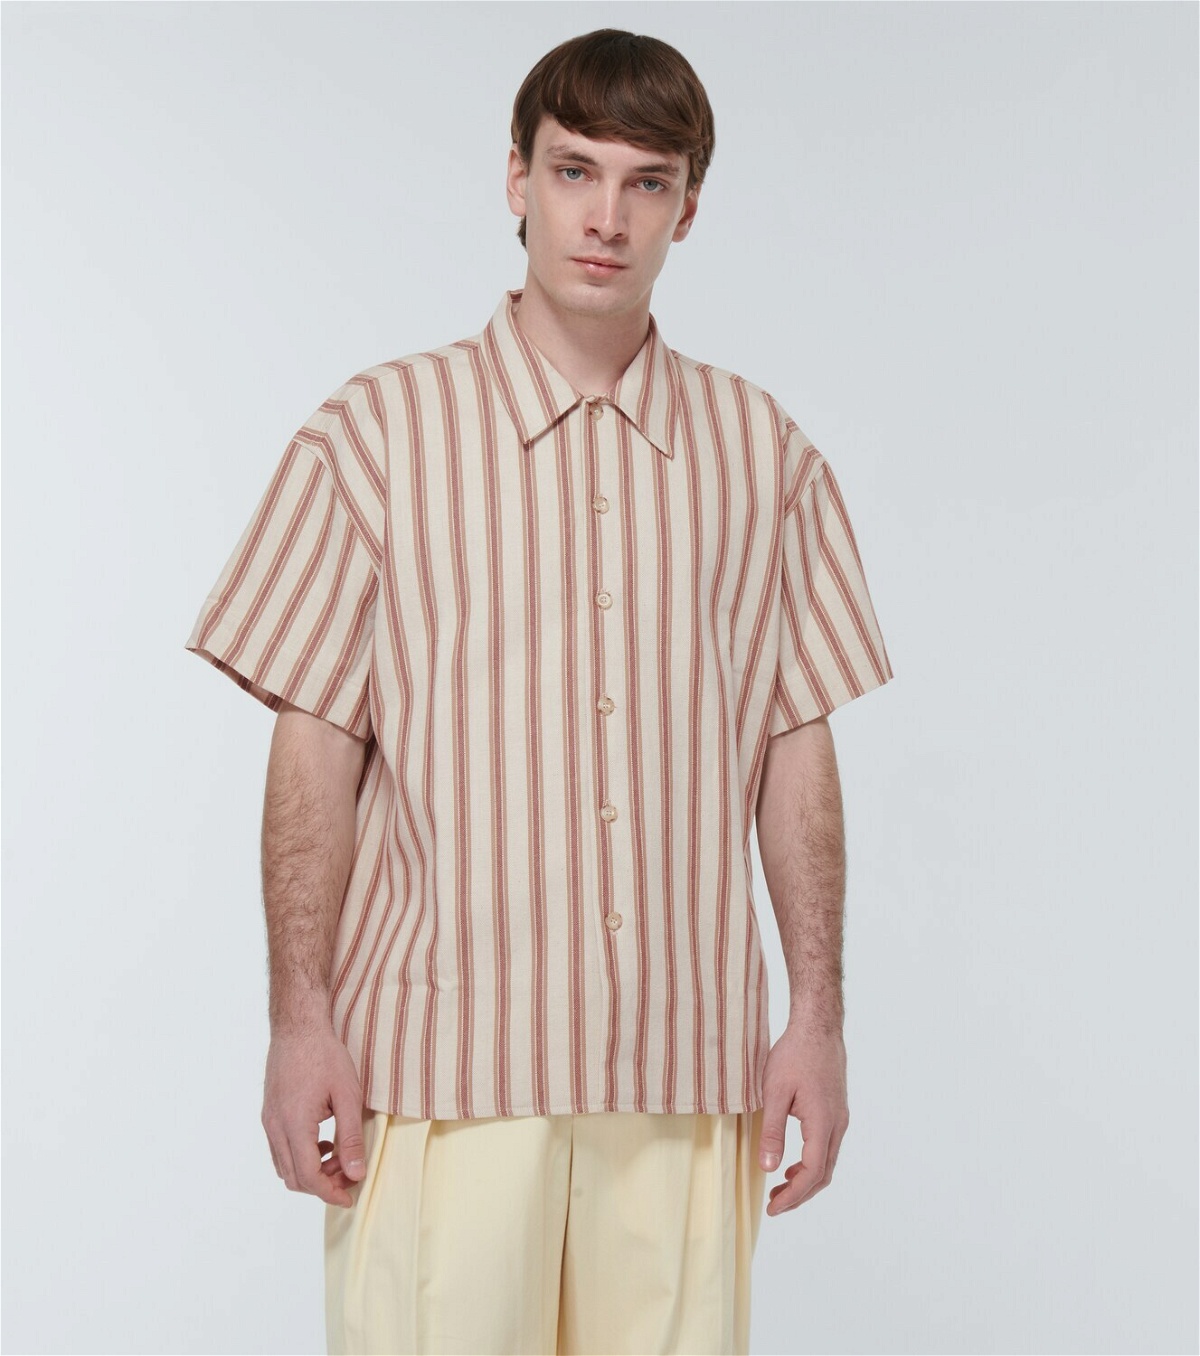 Commas Striped cotton and linen shirt